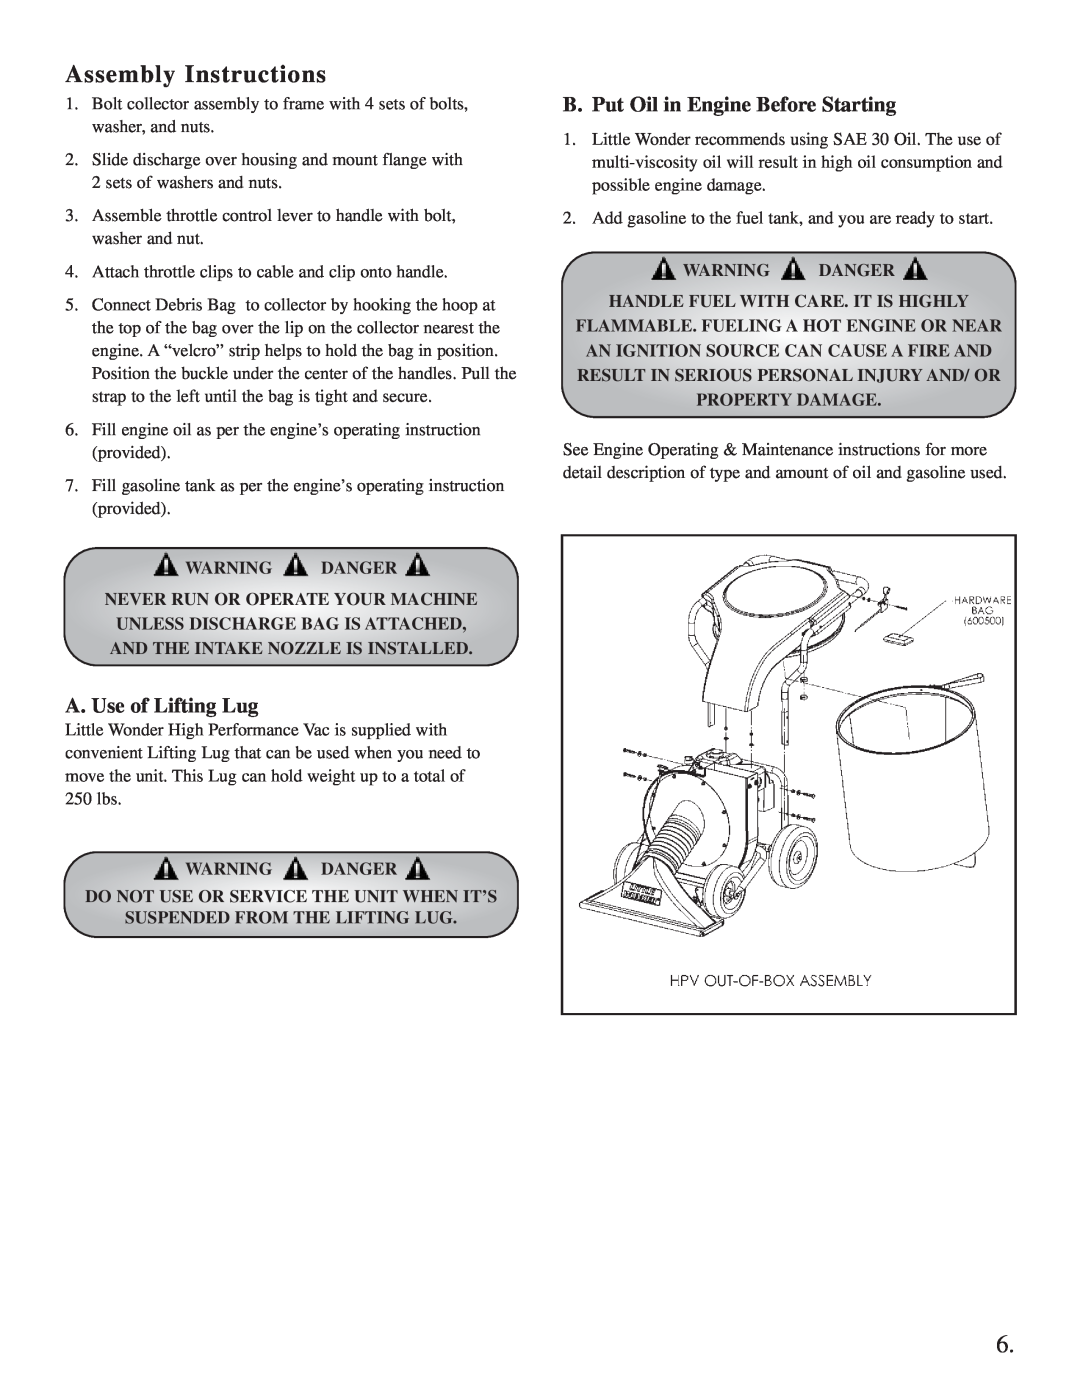 Little Wonder Little Wonder manual A. Use of Lifting Lug, B. Put Oil in Engine Before Starting, Warning Danger 